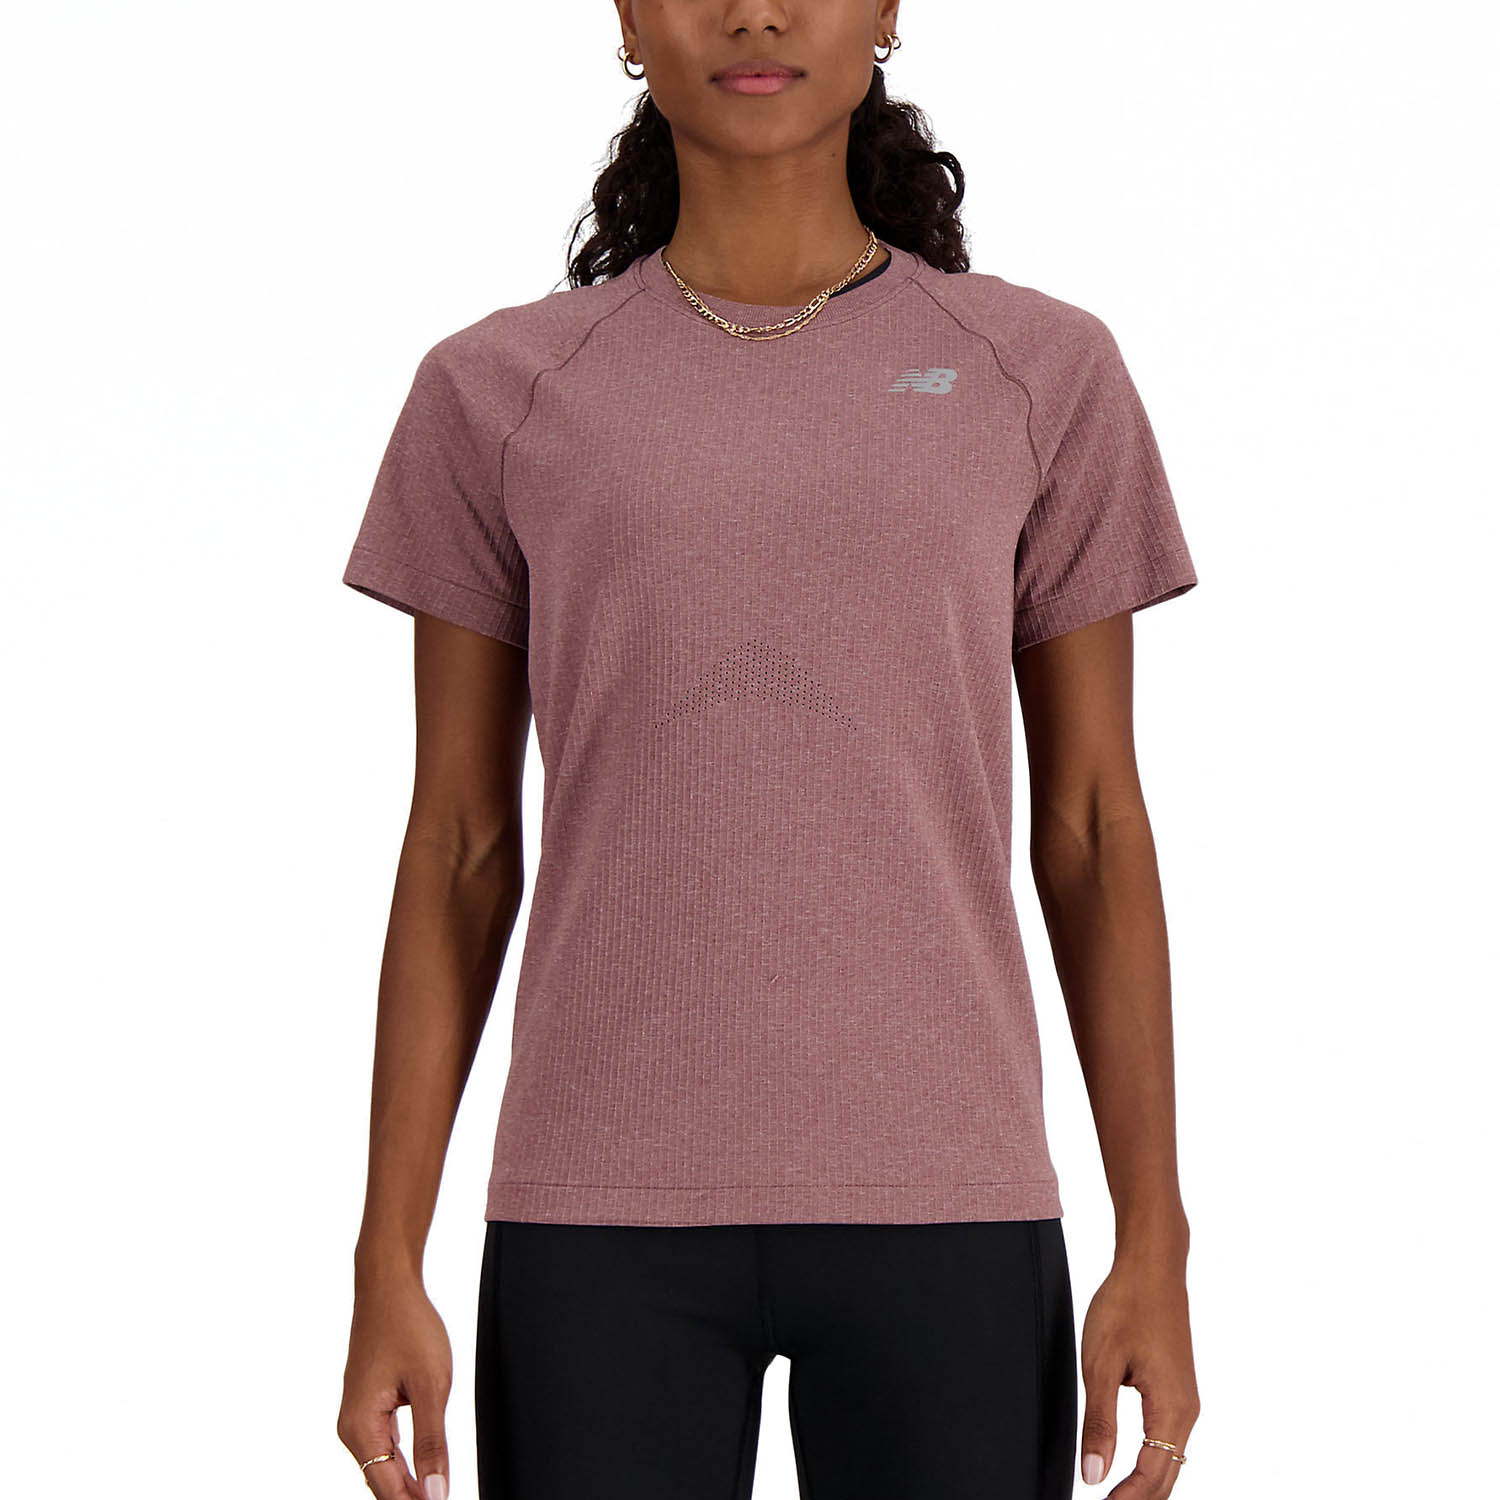 New Balance Speciality Camiseta - Licorice Heather